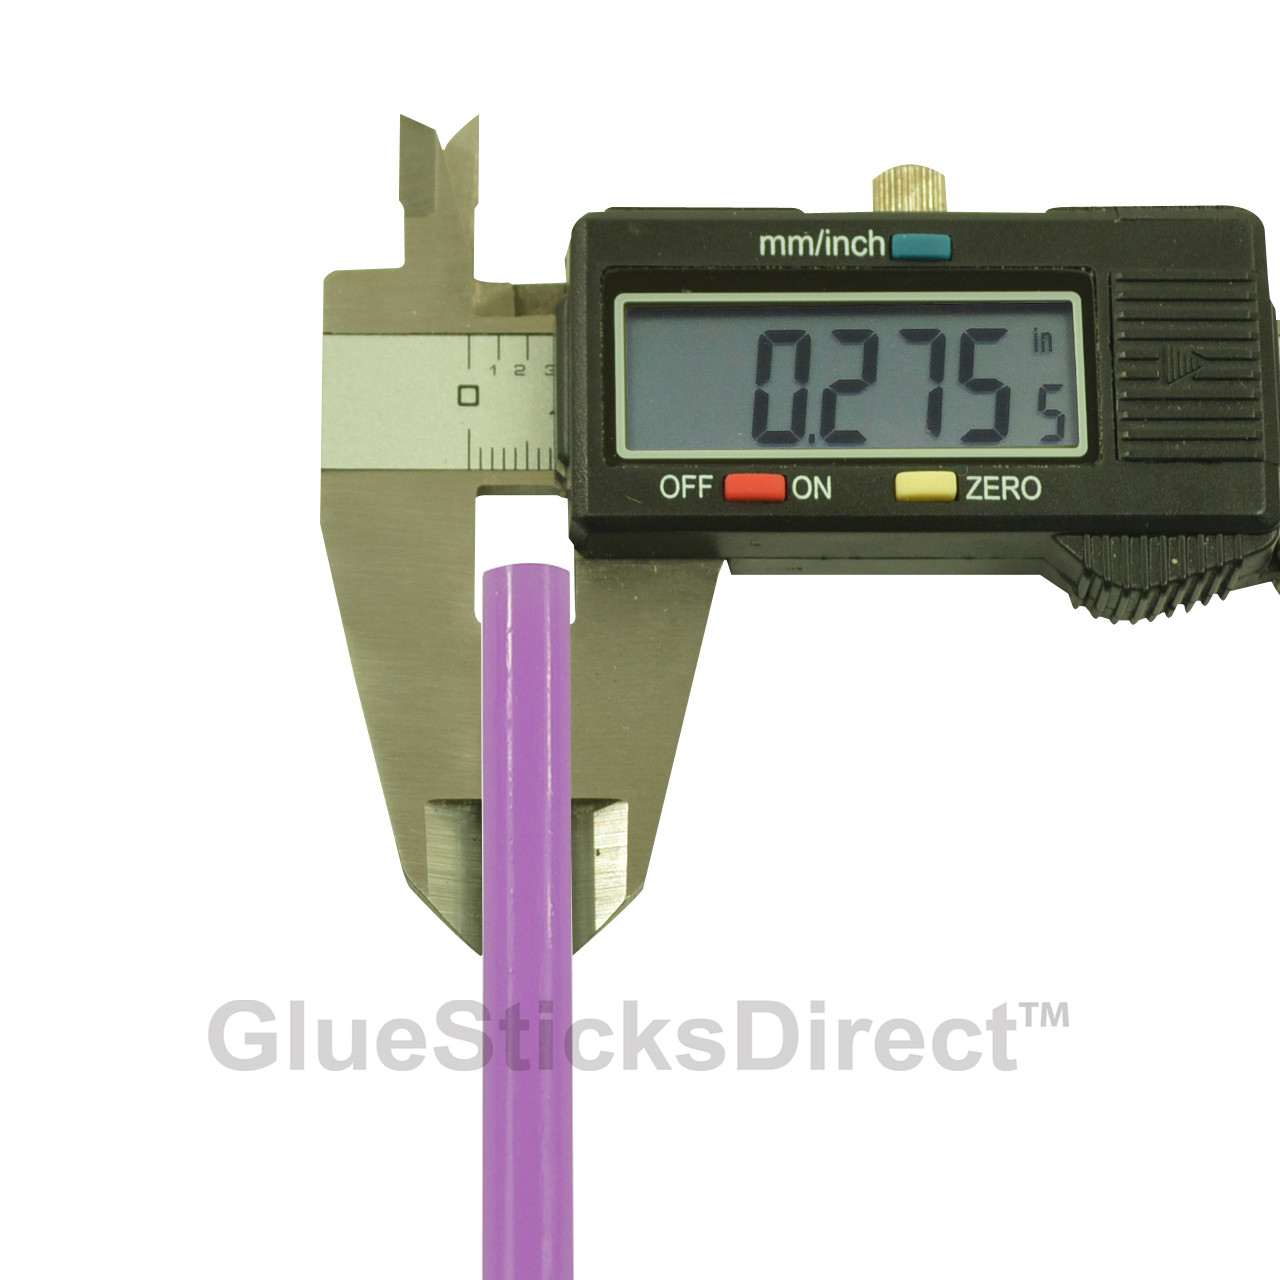 GlueSticksDirect Translucent Purple Colored Glue Sticks Mini X 4" 24 Sticks